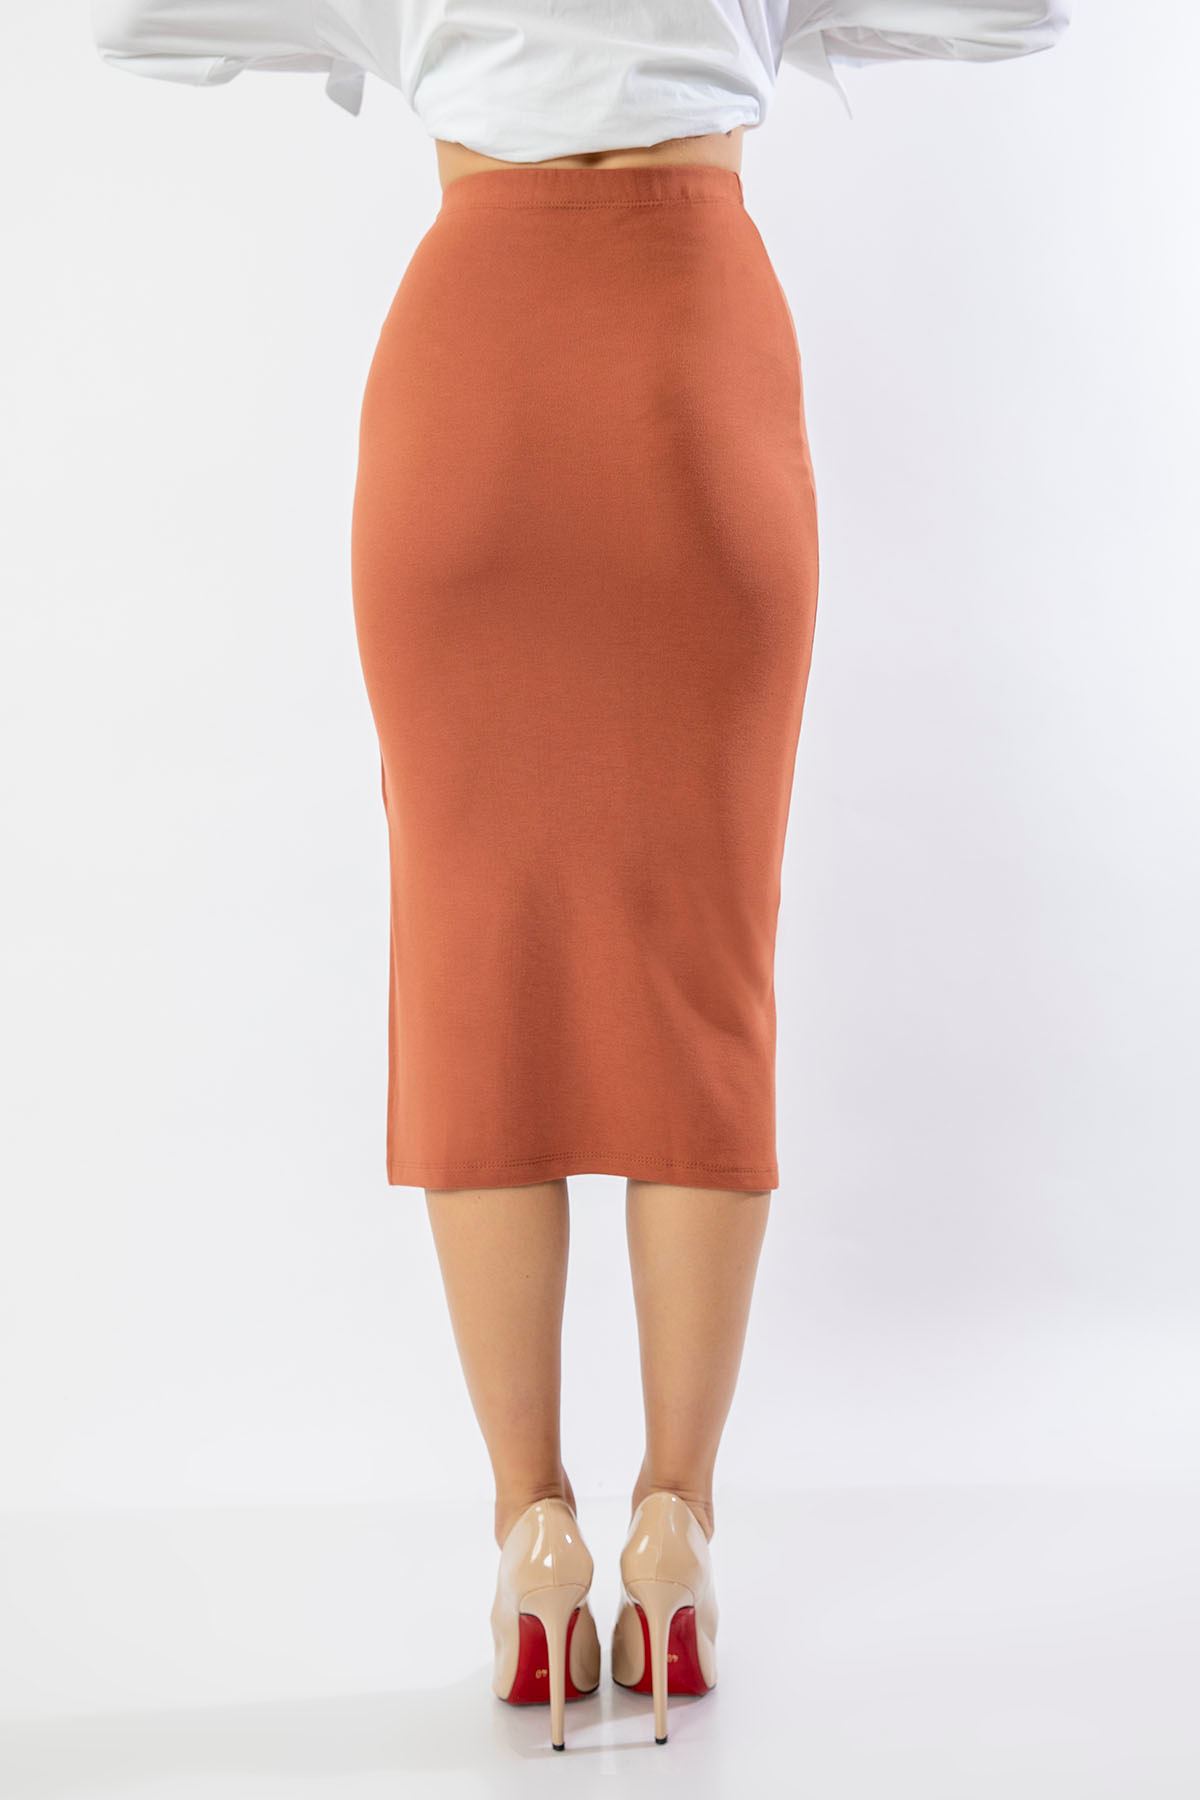 Knit Fabric 3/4 Short Tight Fit Slit Skirt - Light Brown